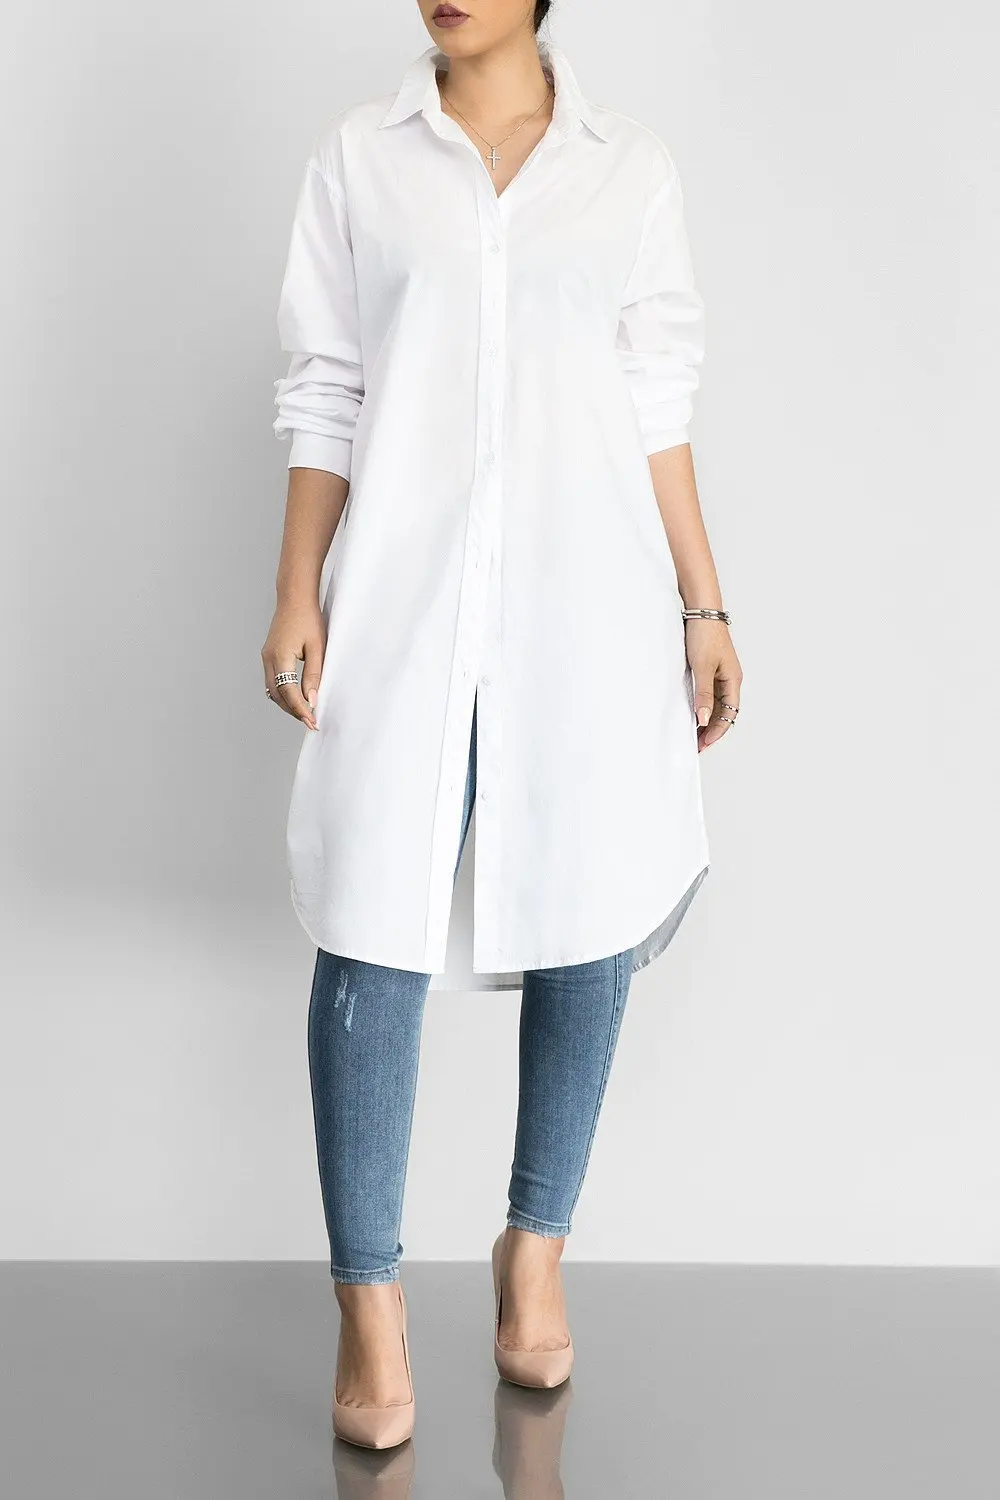 Women's Long Sleeve Knee Length Shirt Solid Color Long Line Shirt Dress White Black Long Shirt Button Up Ladies Blouse